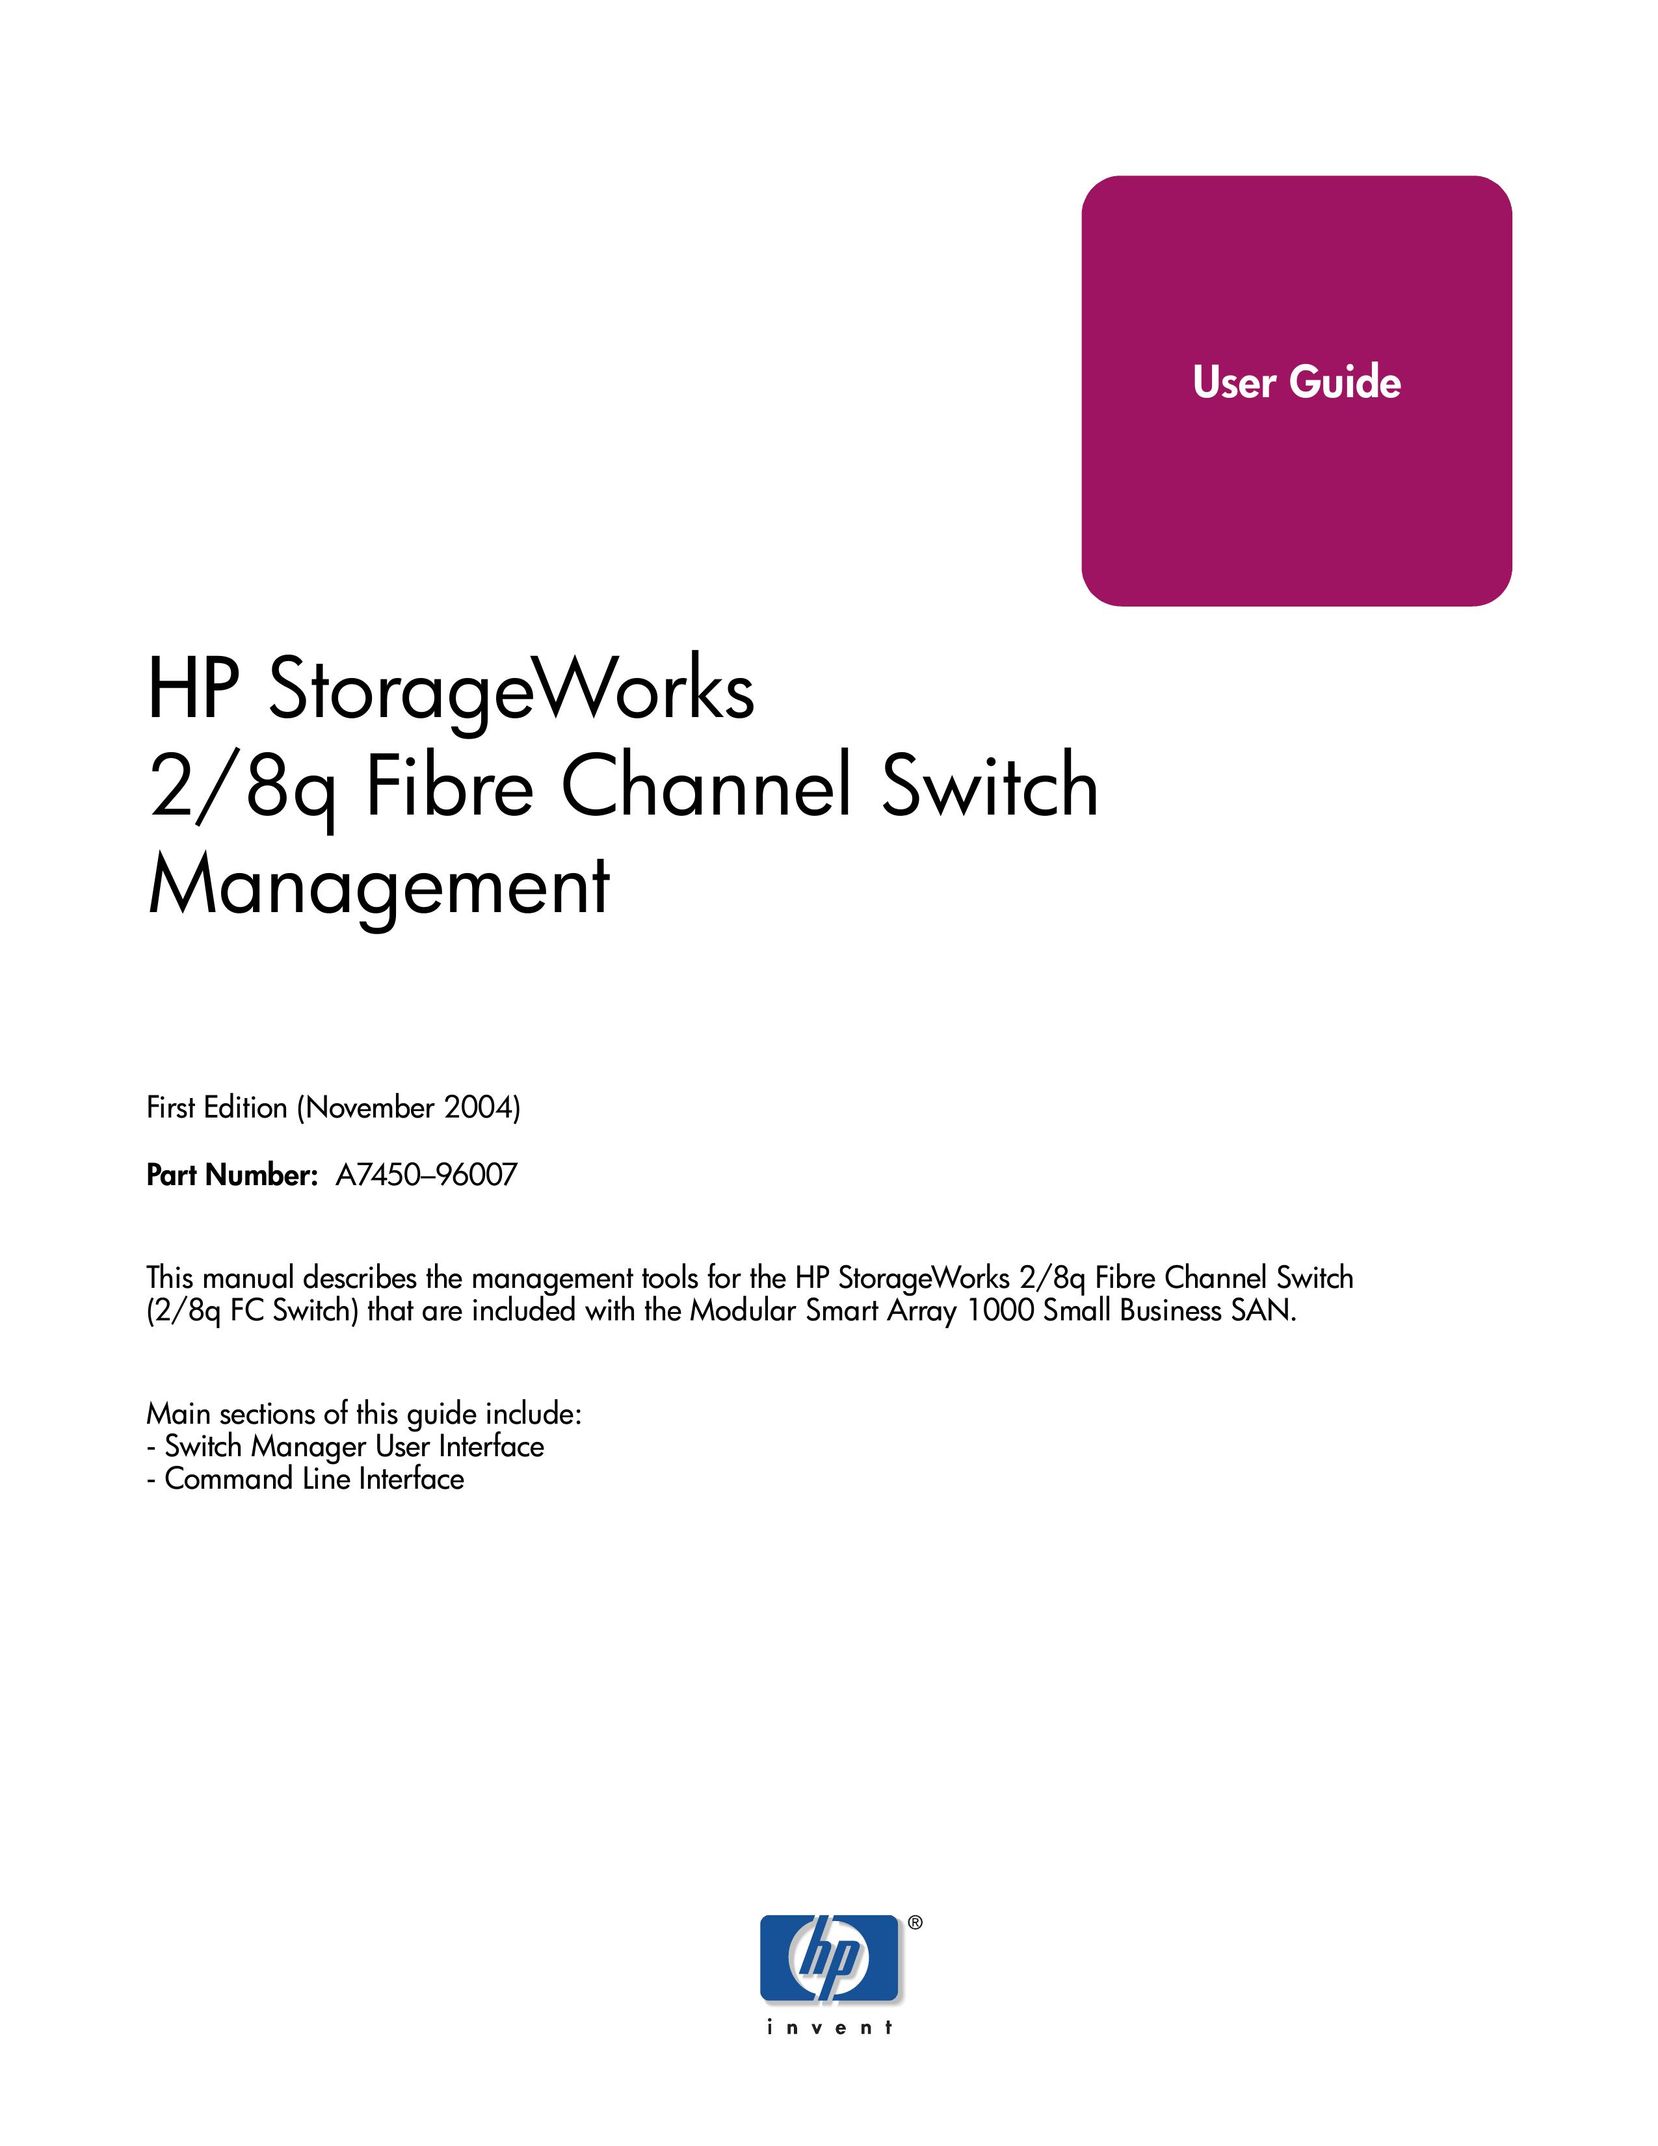 HP (Hewlett-Packard) 2/8q Fibre Channel Switch User Manual